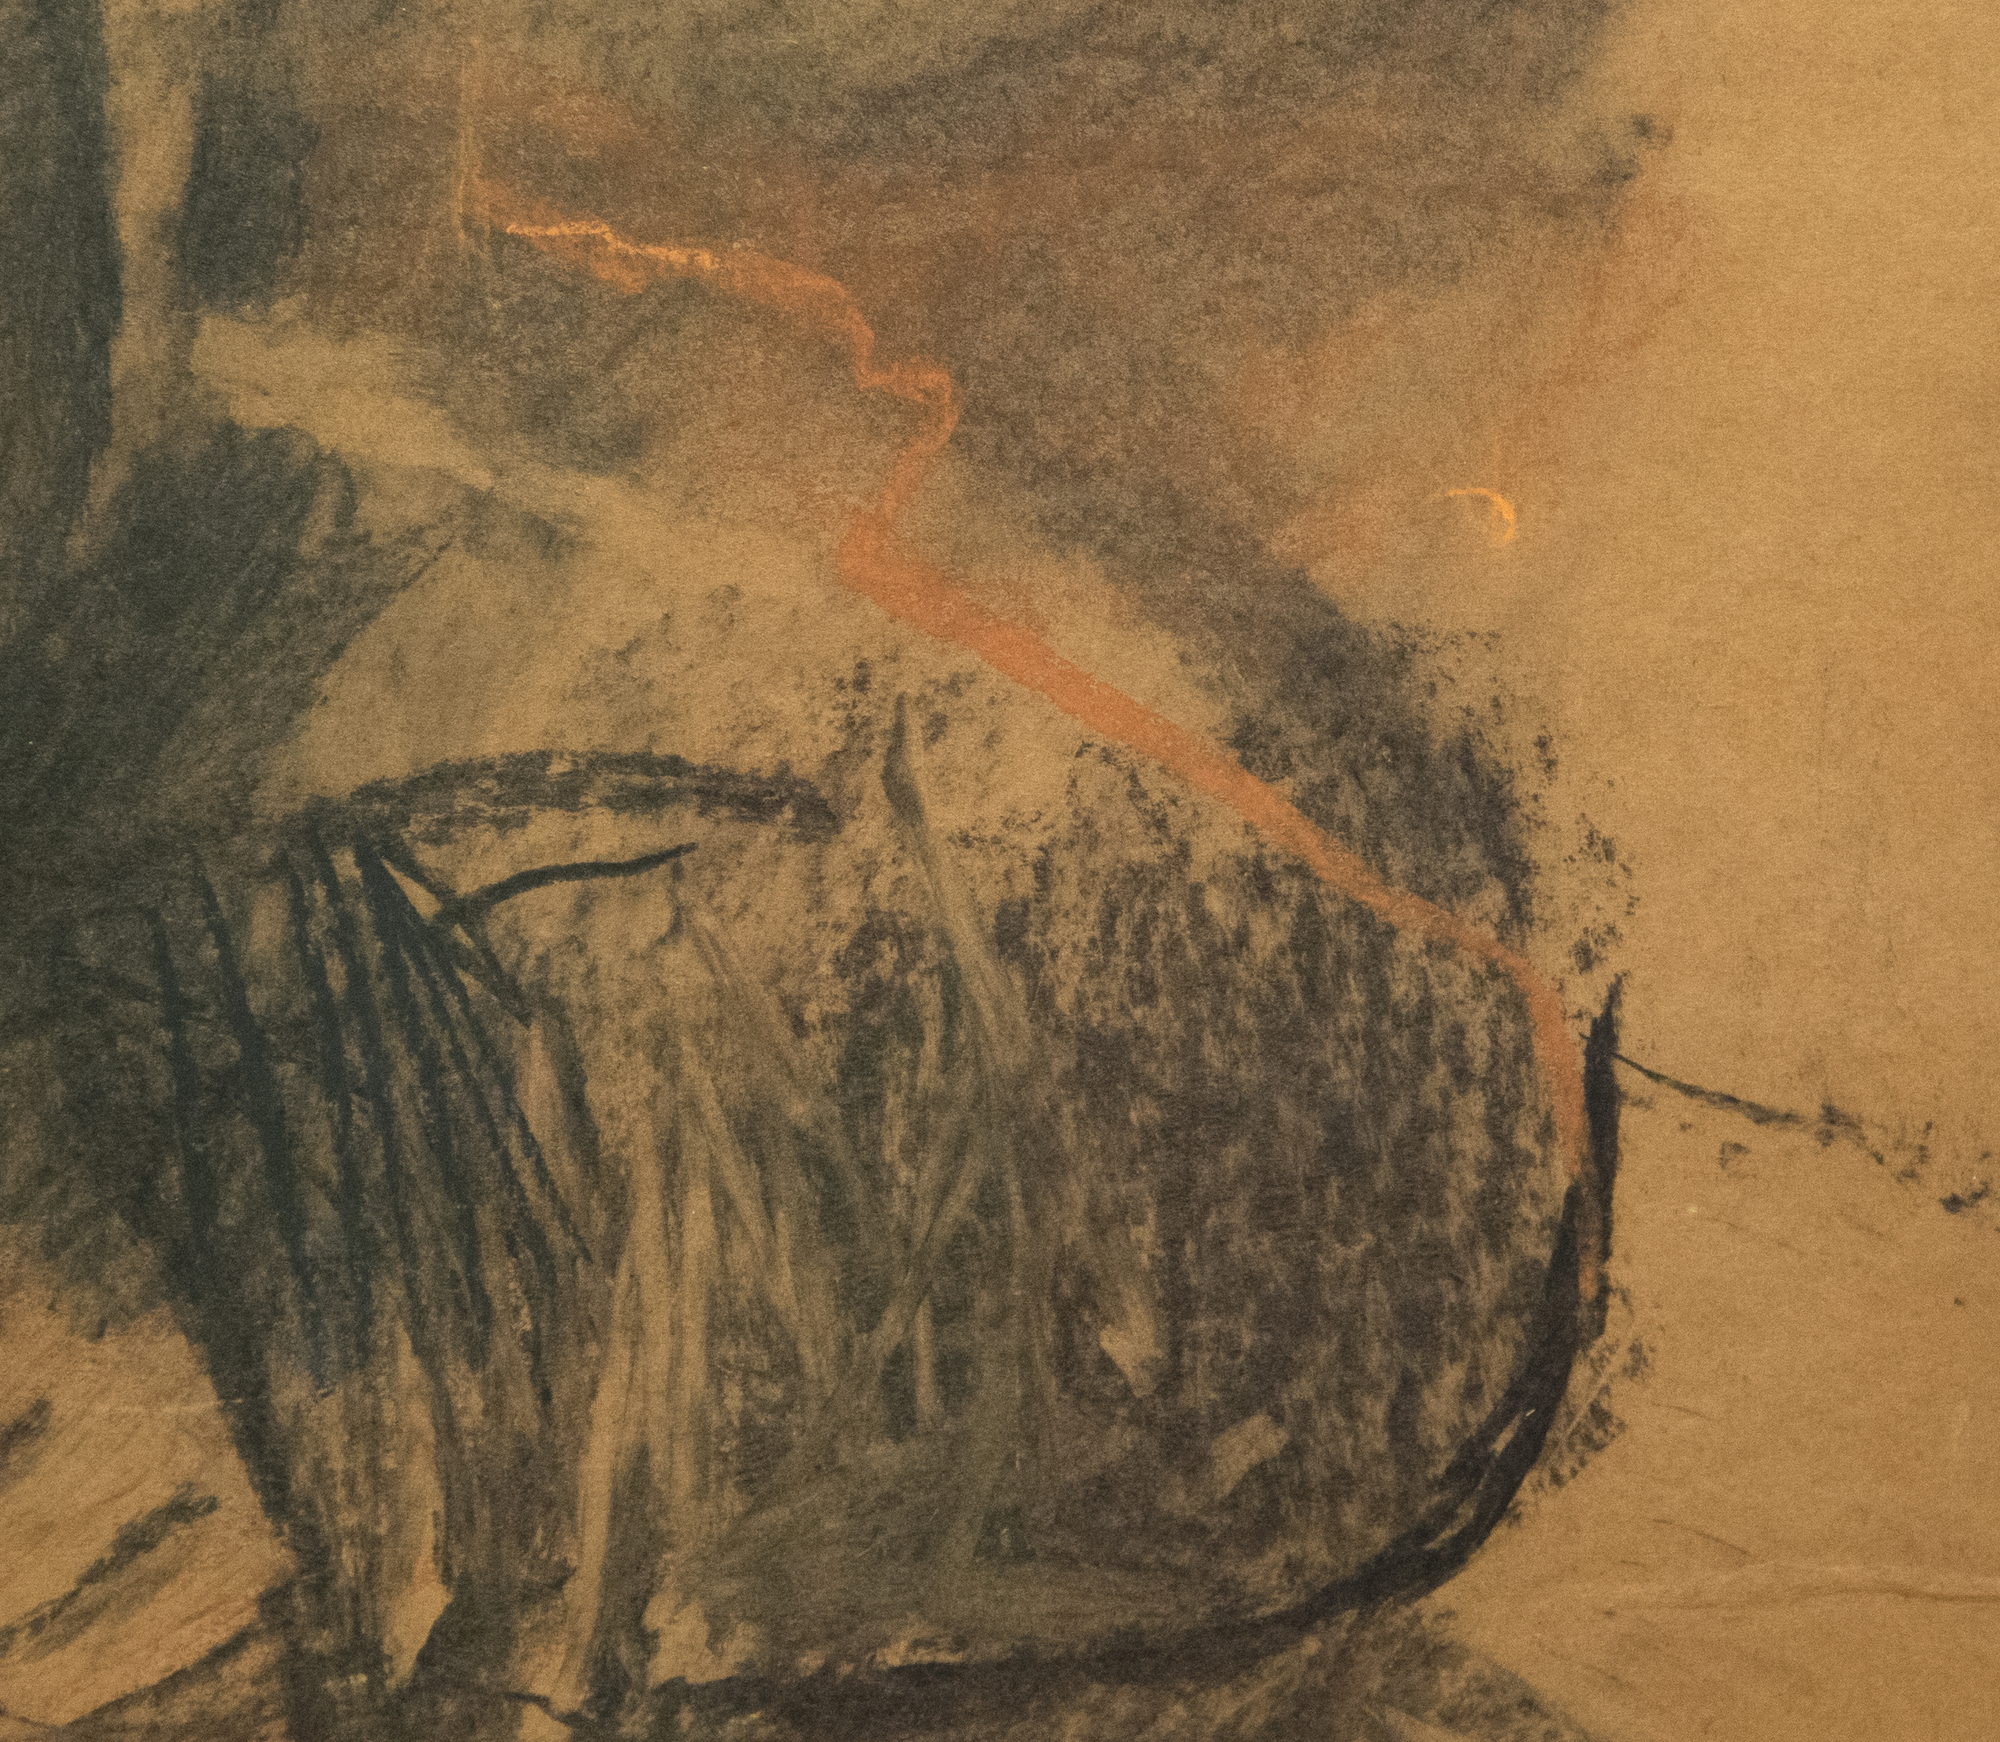 FERNANDO BOTERO - Autoretrato a la manera de Velázquez - sanguine and crayon on cardboard - 60 1/2 x 47 1/2 in.